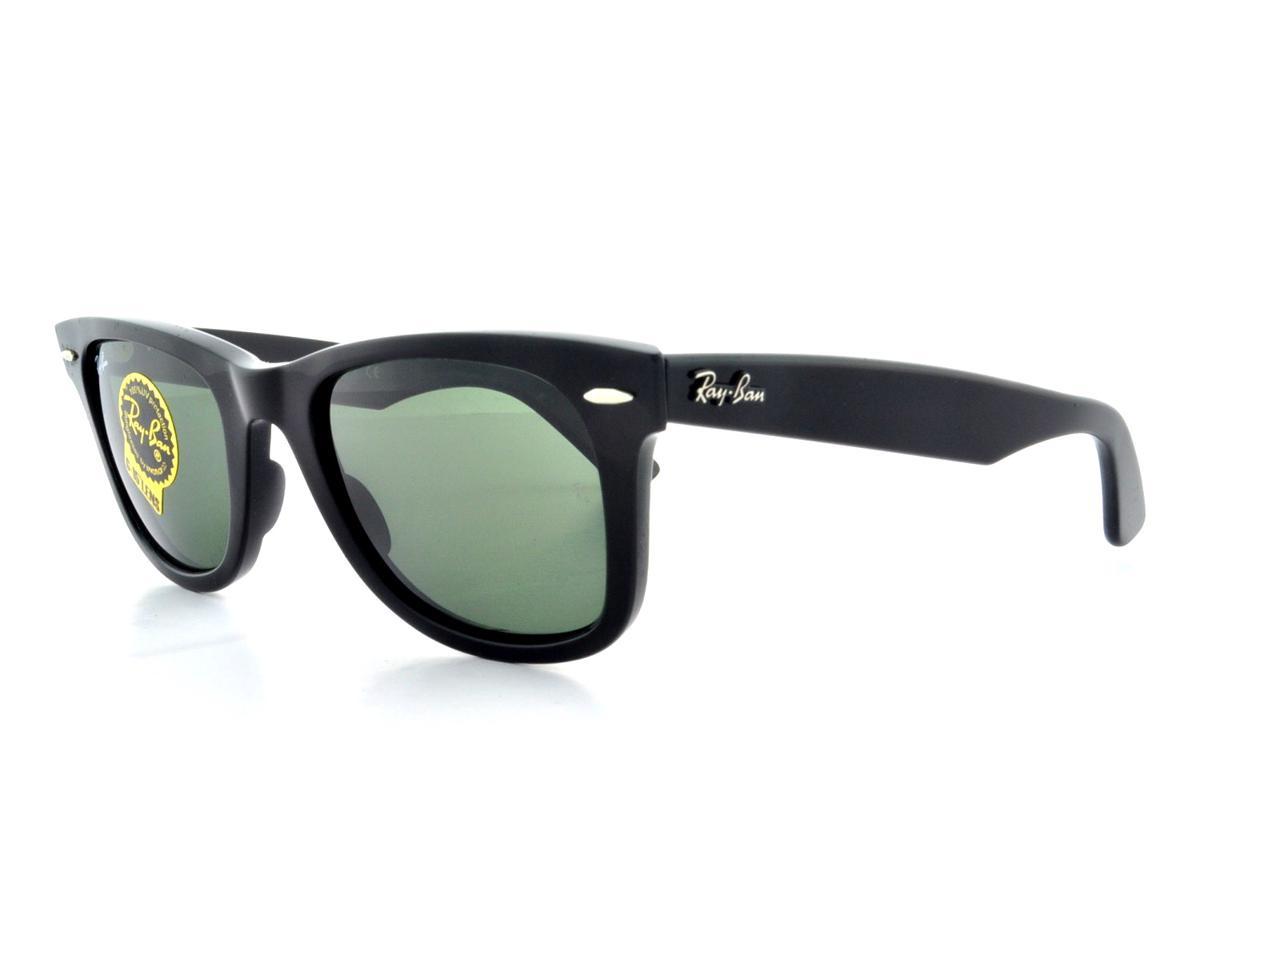 RAY BAN Sunglasses RB 2140 901 Black 50MM - Newegg.com